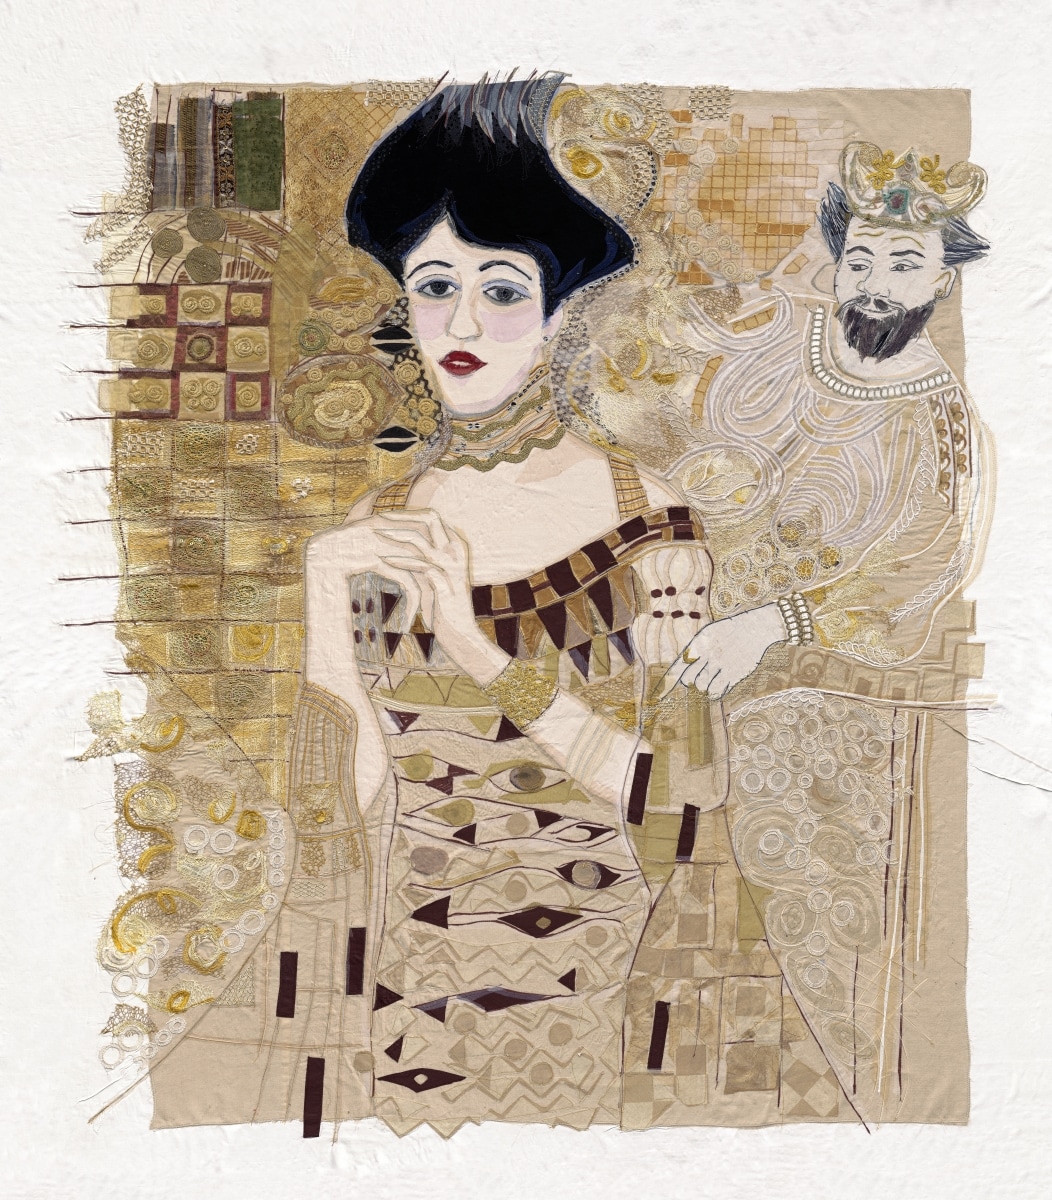 Midas’ Touch: The Woman in Gold, Portrait of Adele Bloch-Bauer by Gustav Klimt​